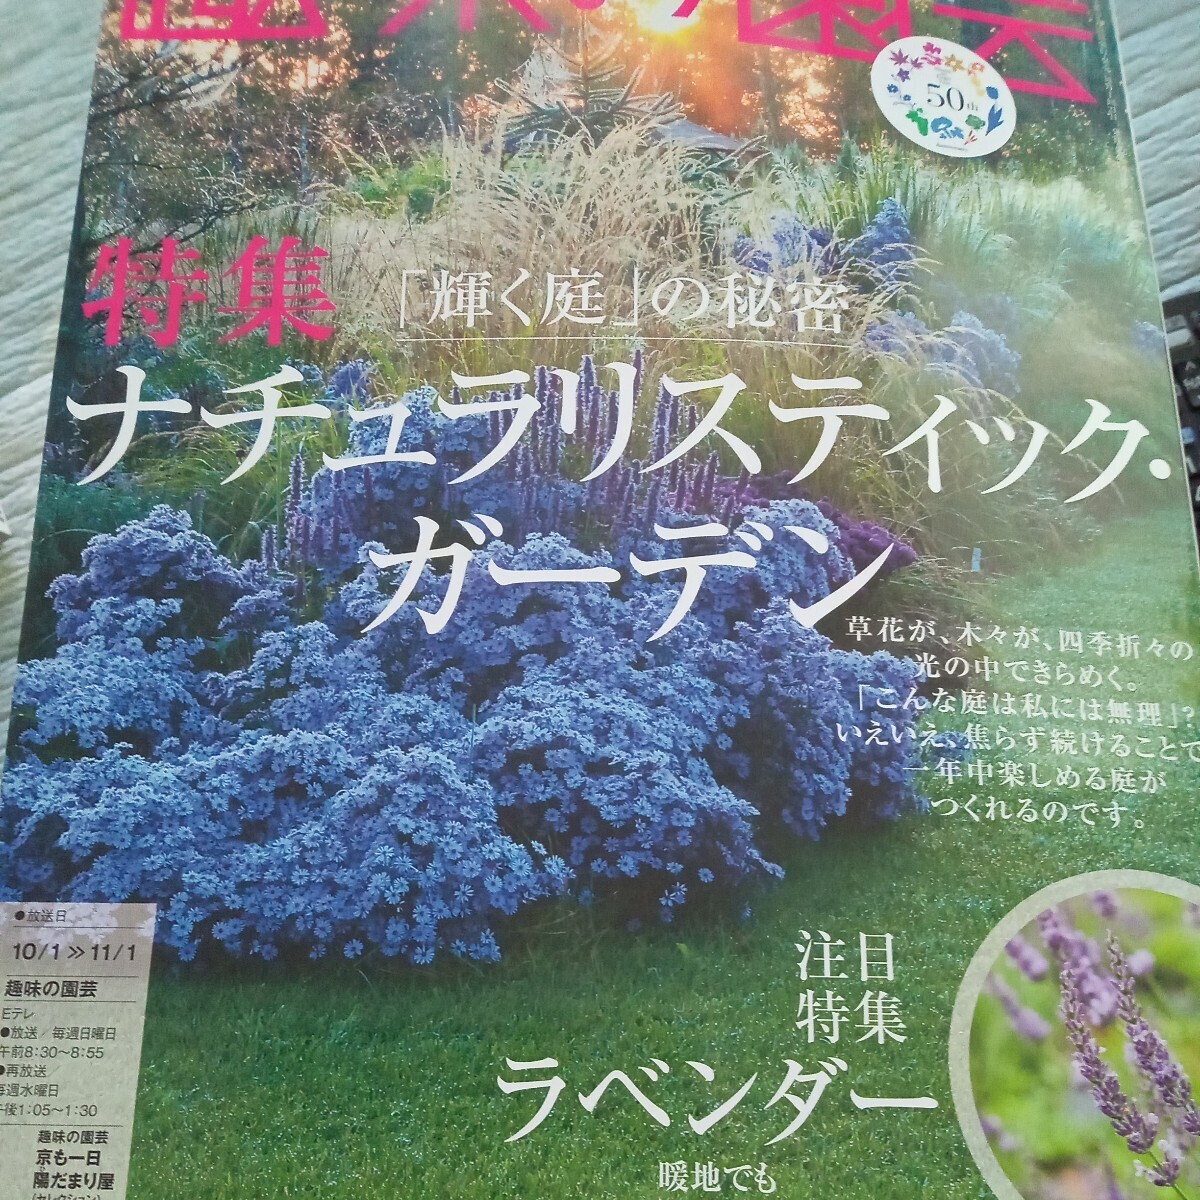 nachulali палочка сад лаванда роза NHK хобби. садоводство 2023 год 10 месяц номер (NHK выпускать )